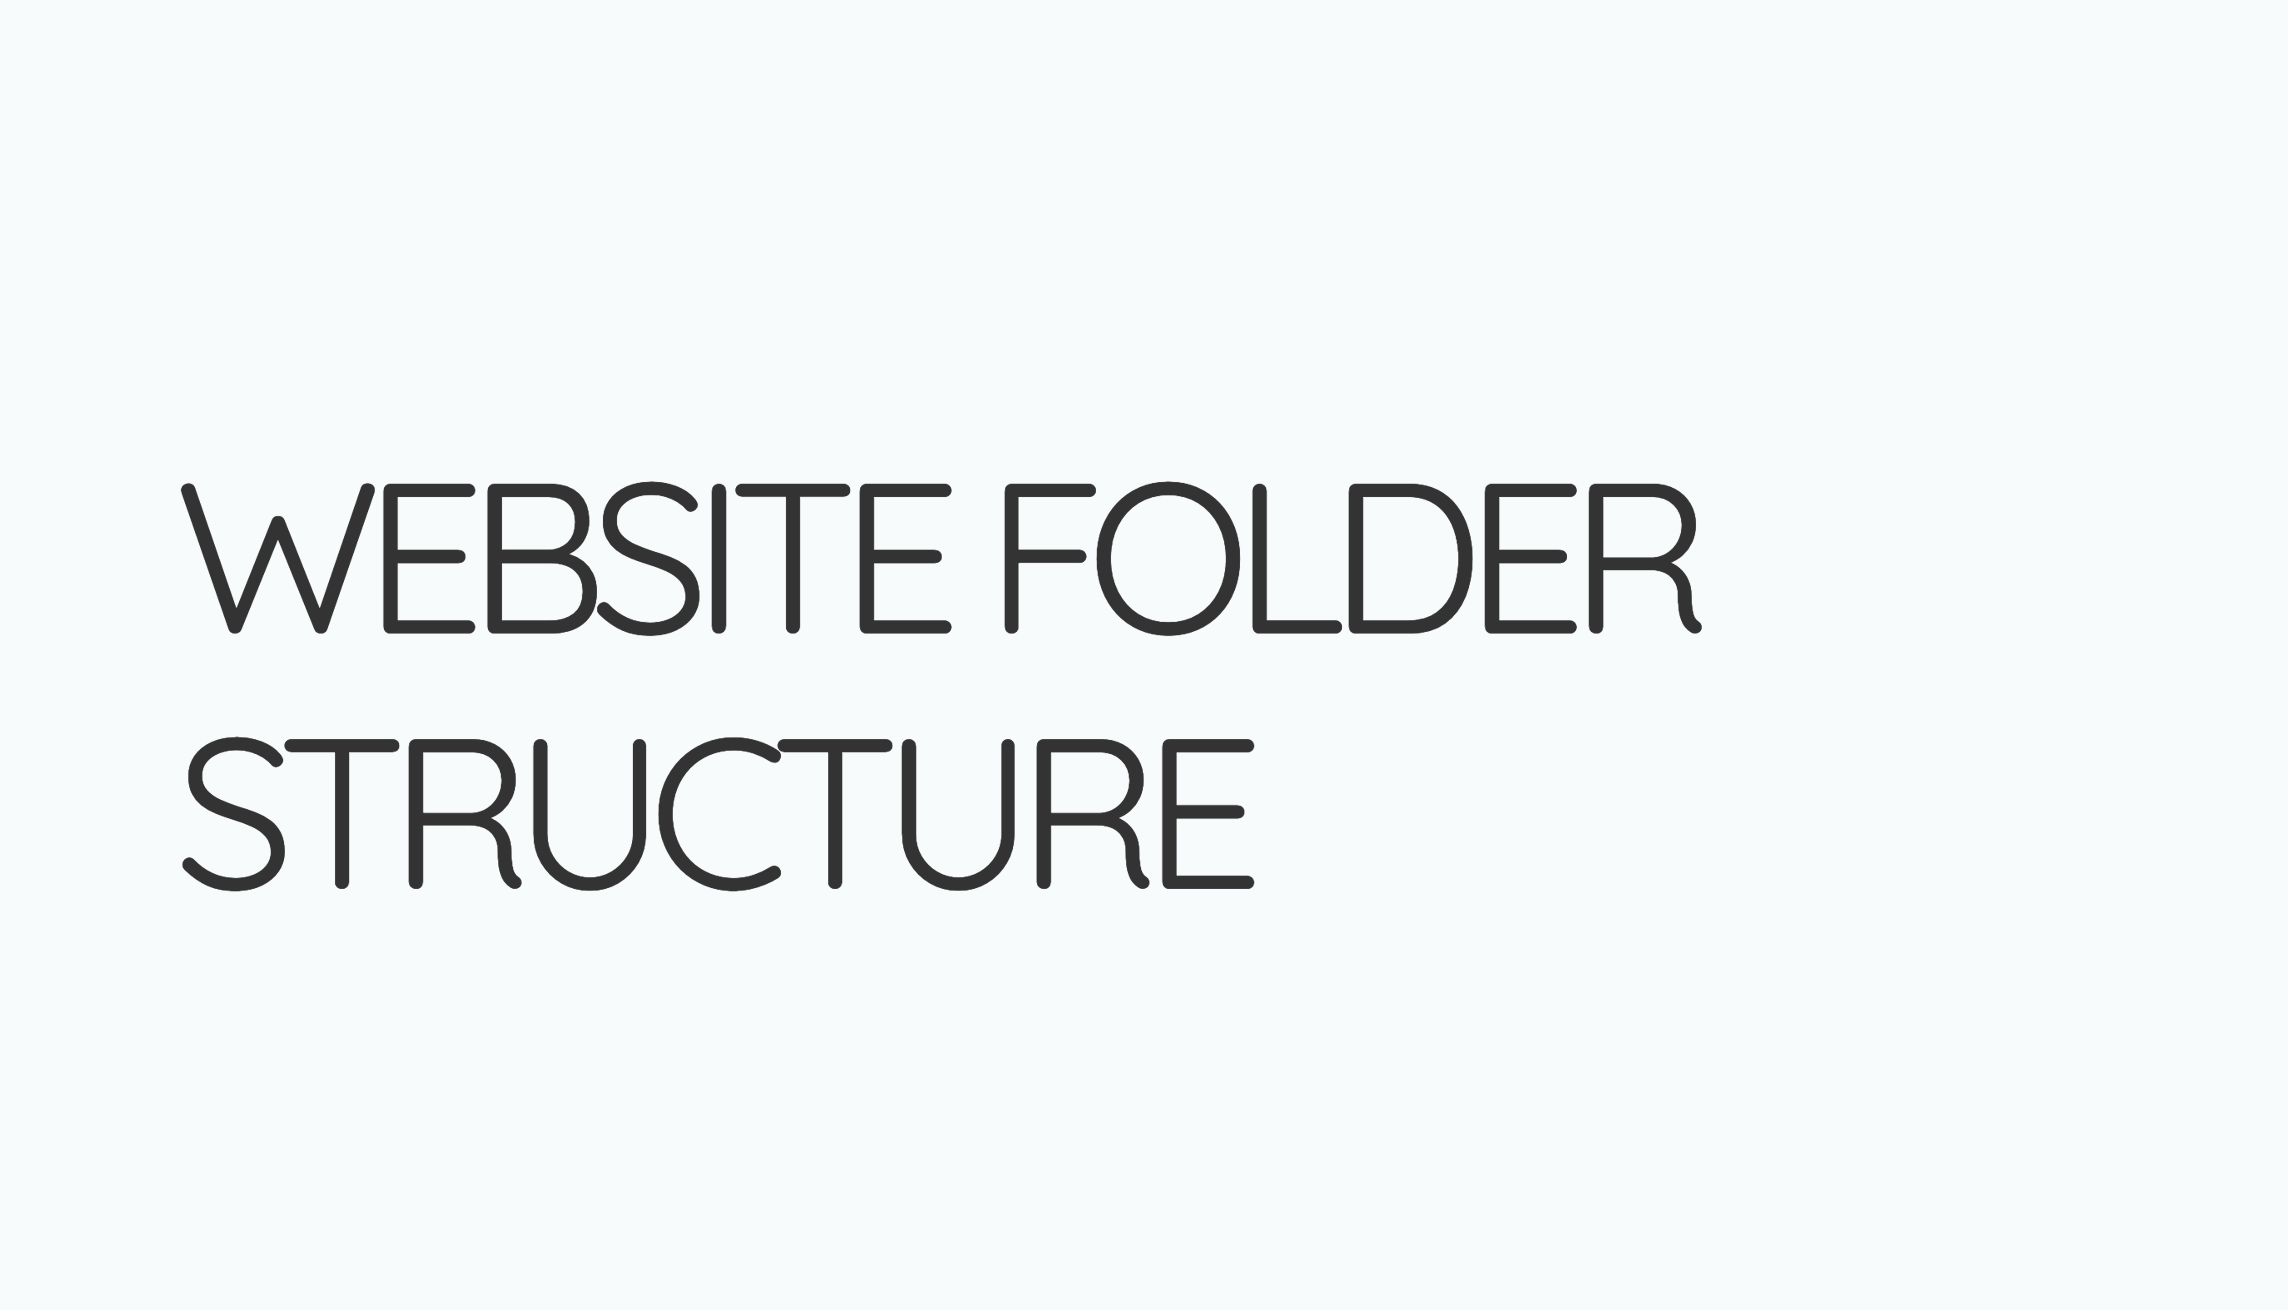 Slides: What structure should a website have?